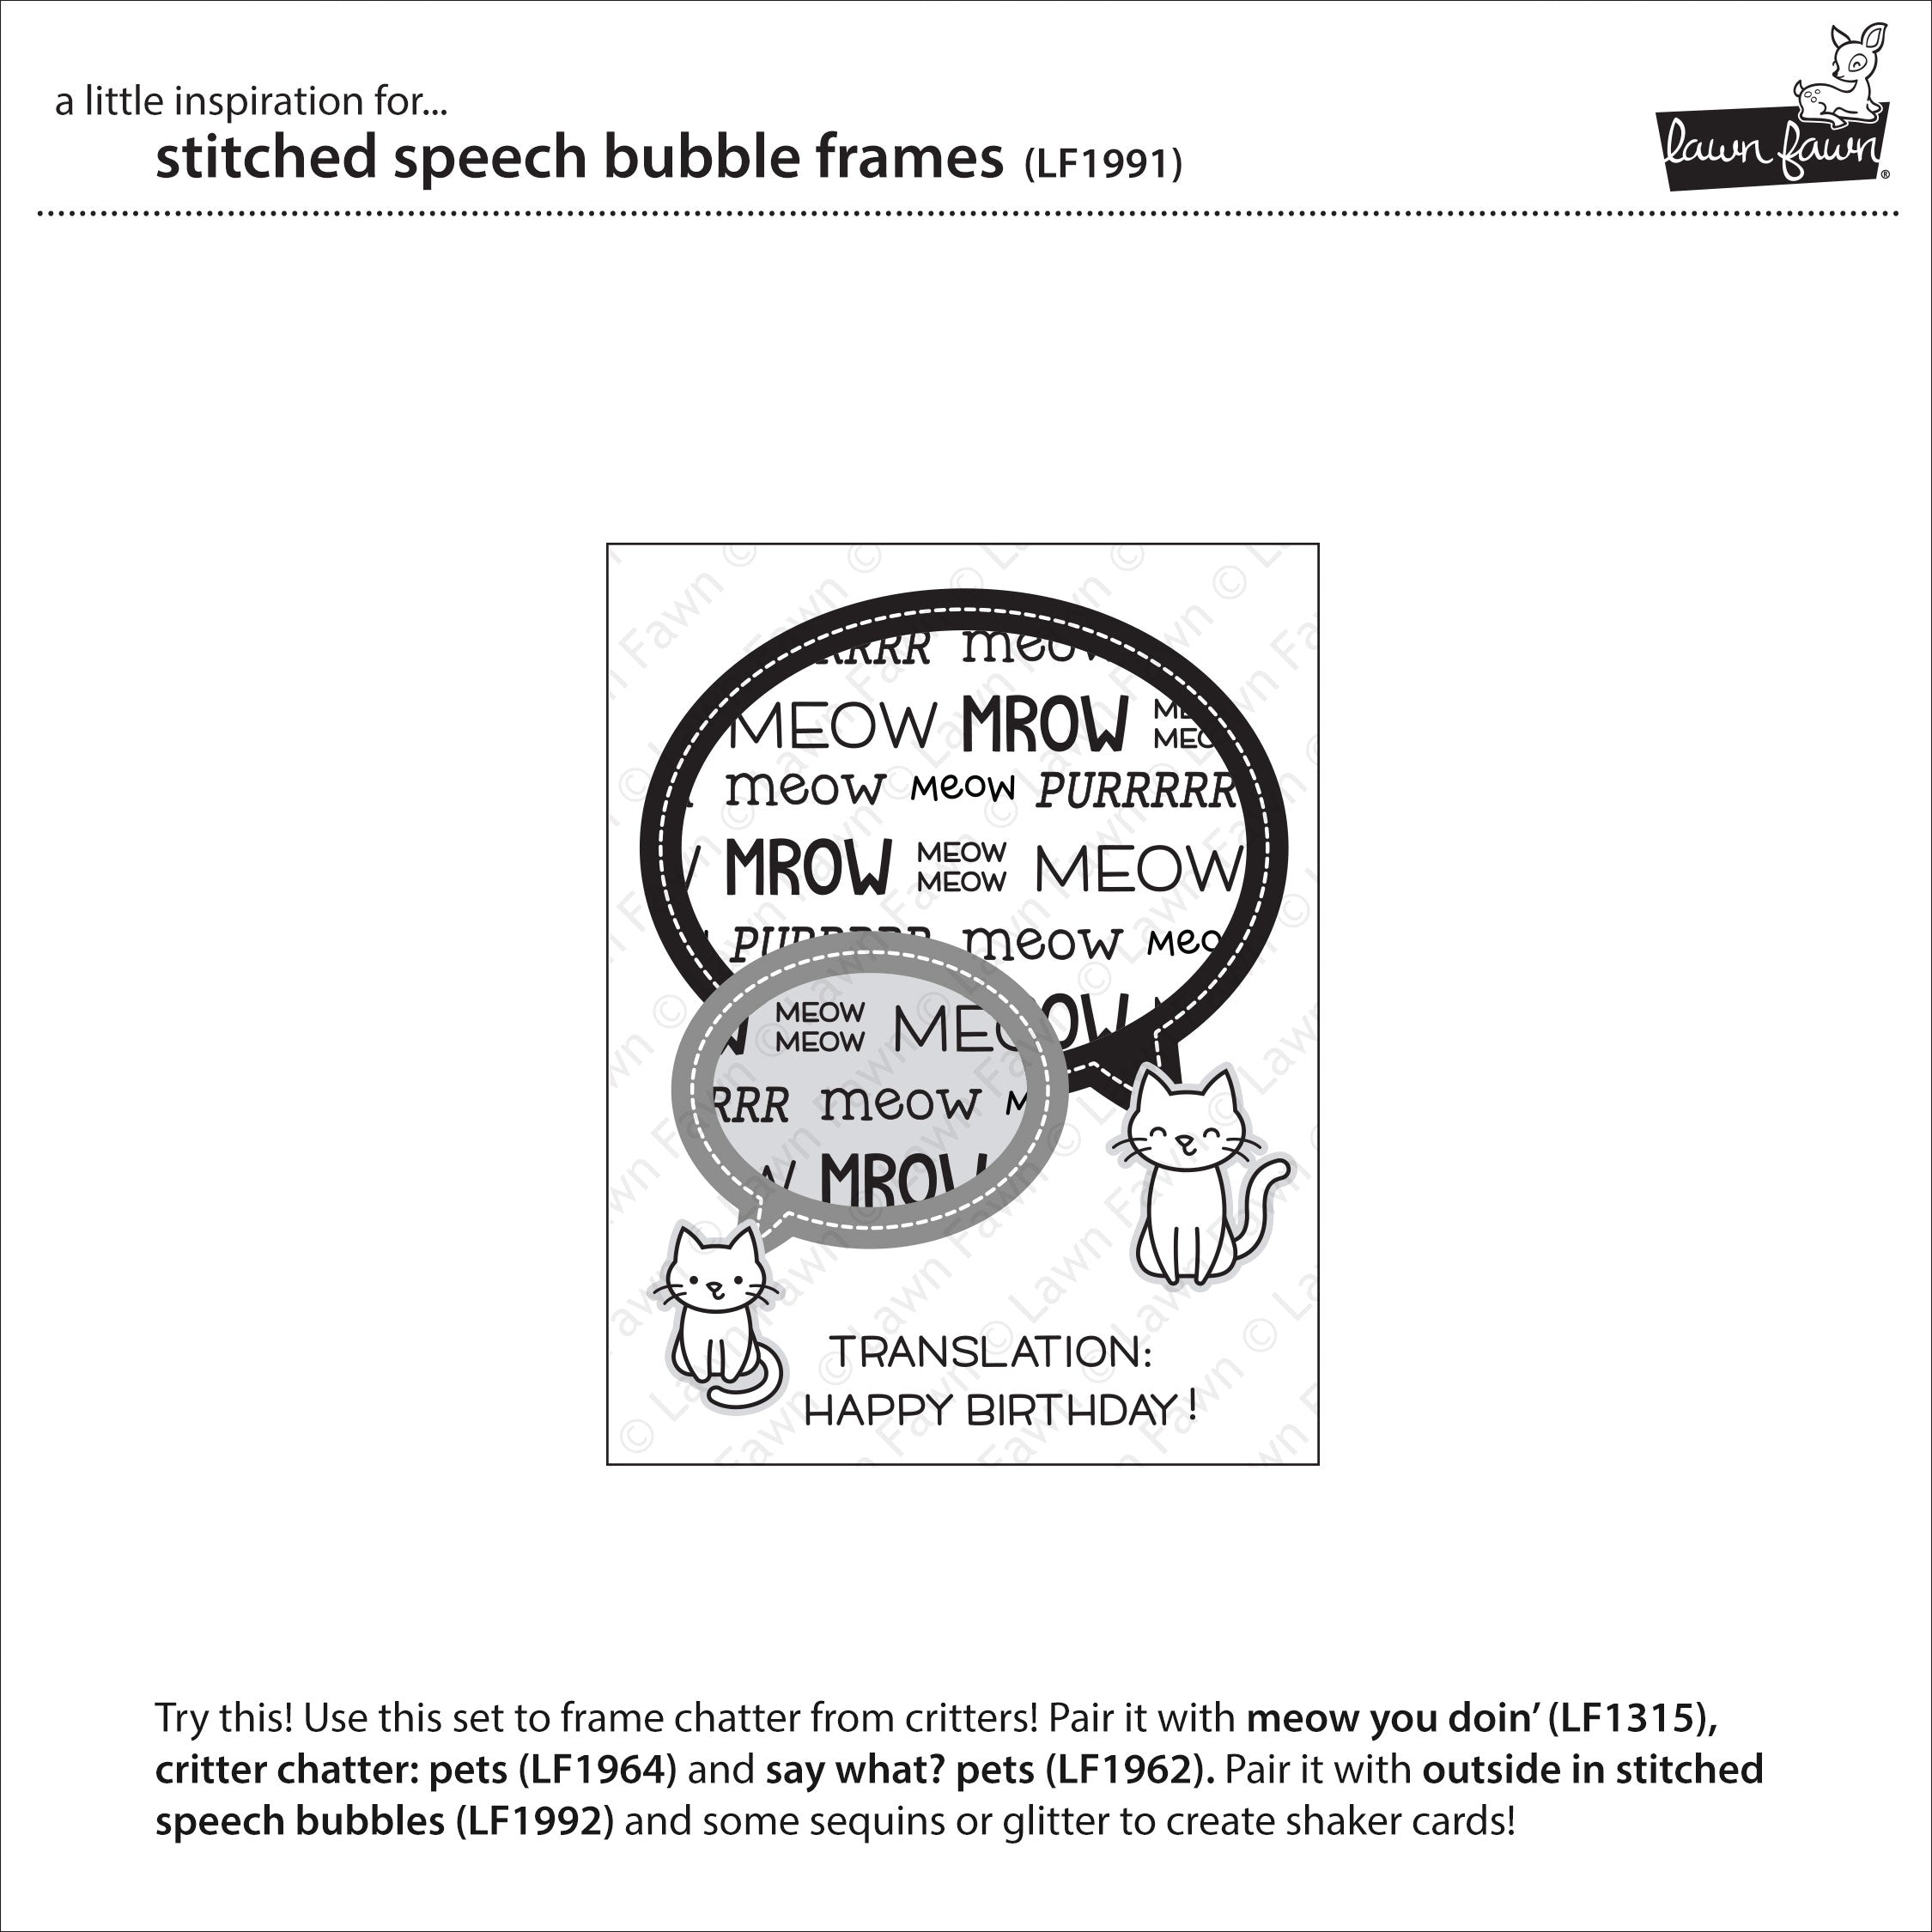 LAWN FAWN Suaje - Stitched Speech Bubble Frames